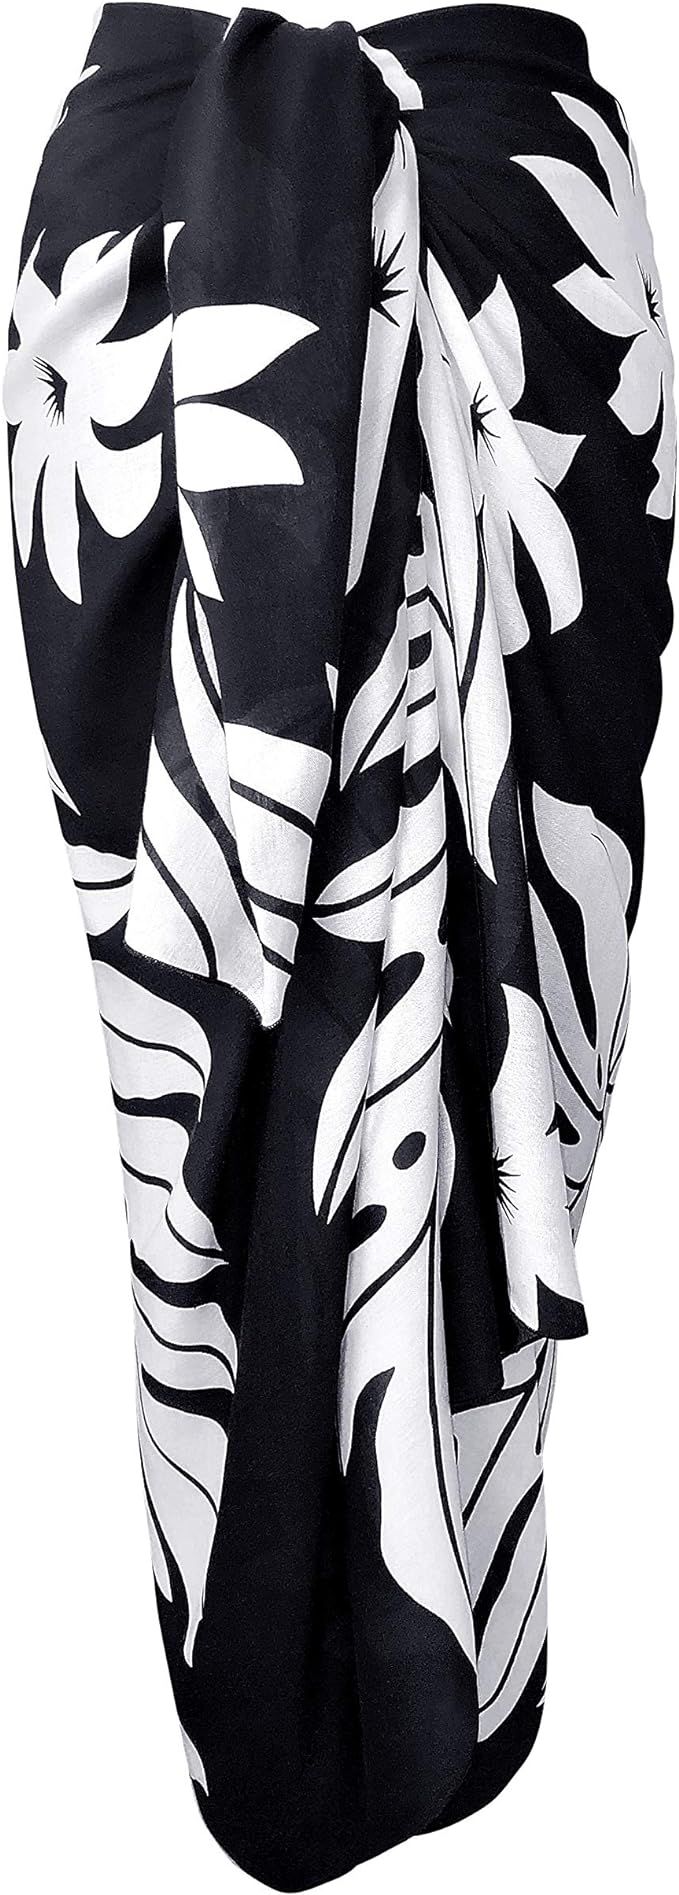 Sarong For Women Black & White Swimsuit Cover Up Bikini Beach Skirt Wrap | Amazon (US)